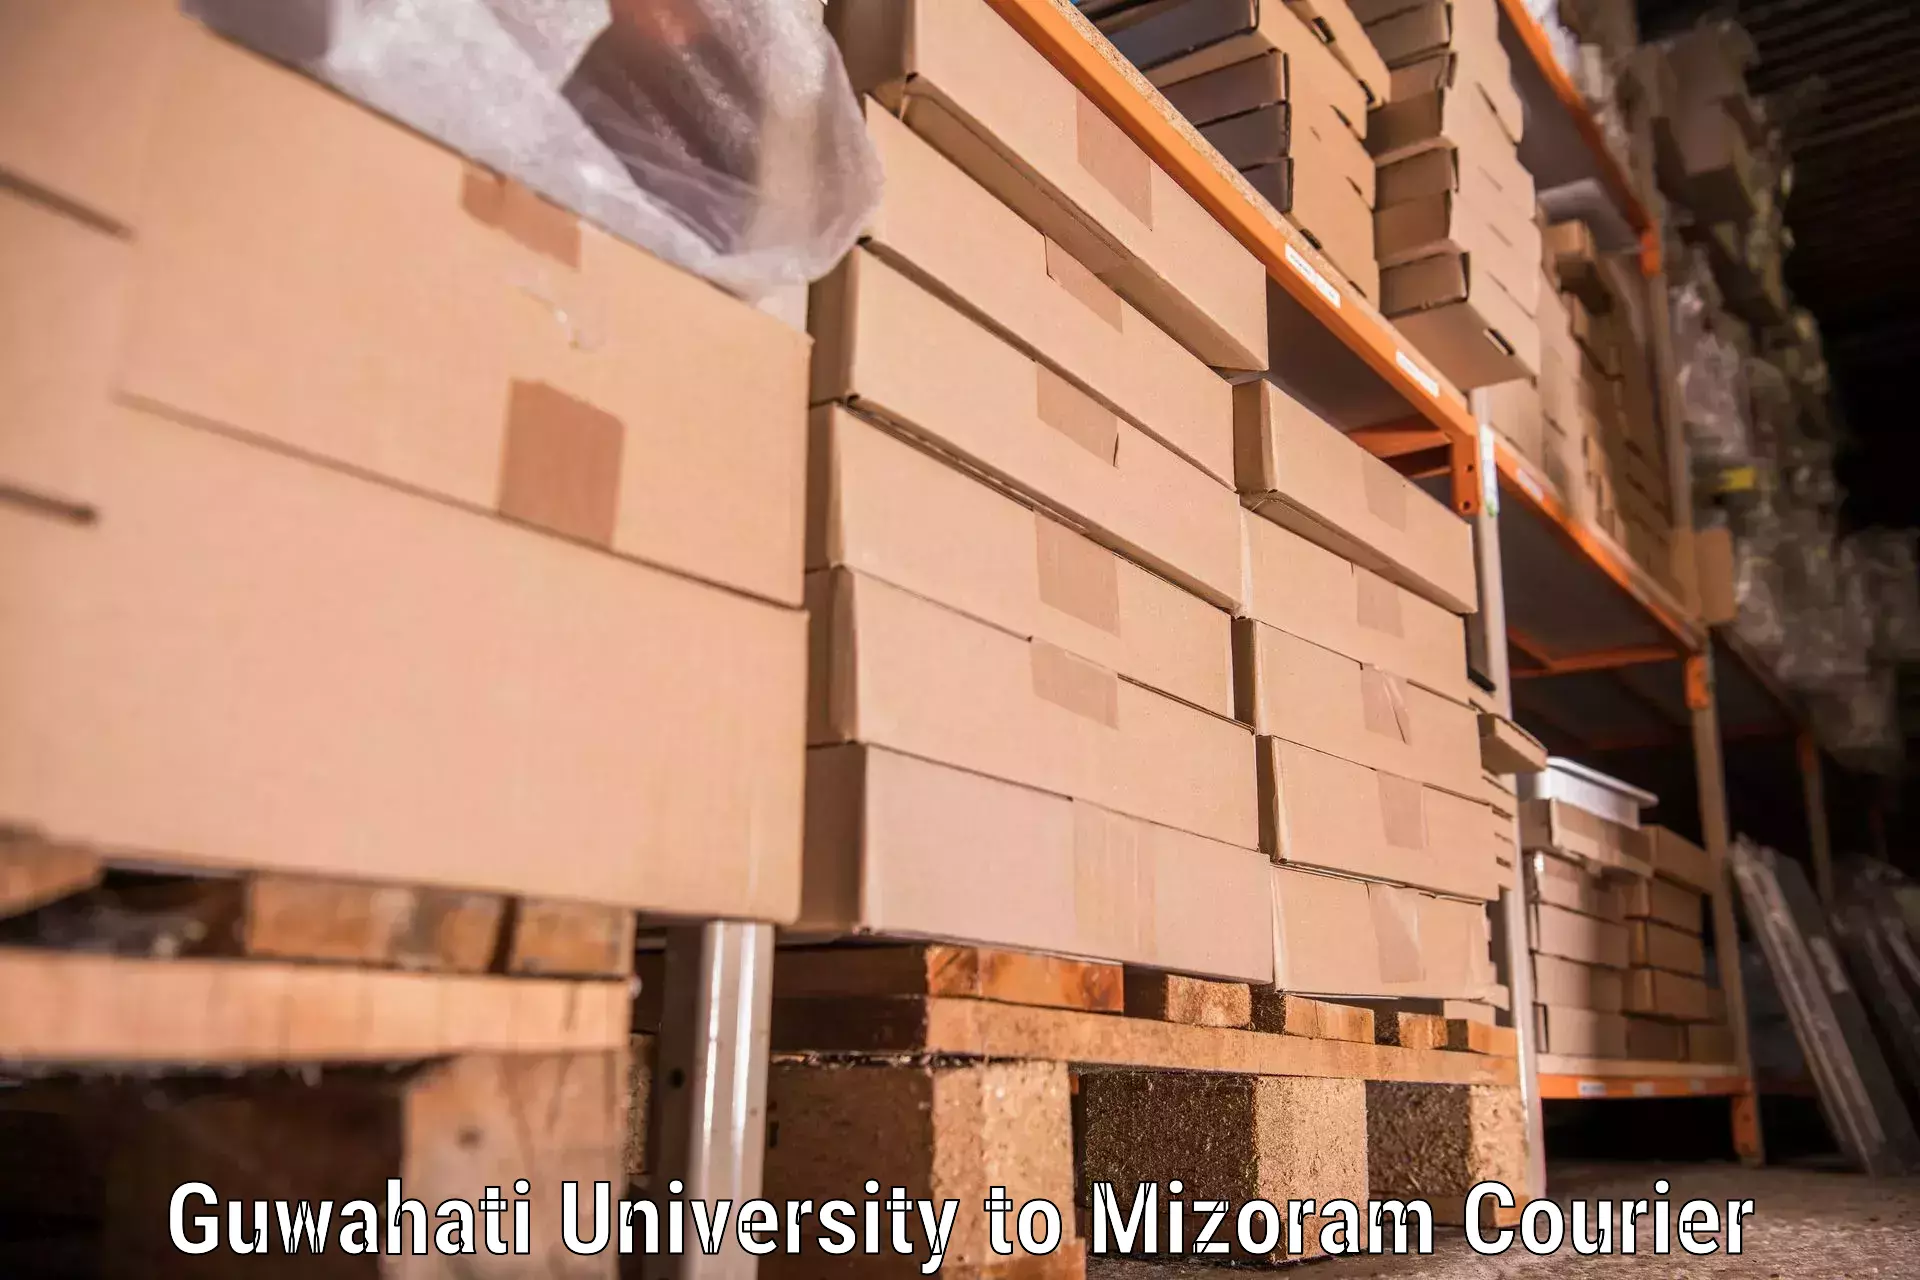 Furniture delivery service Guwahati University to Mizoram